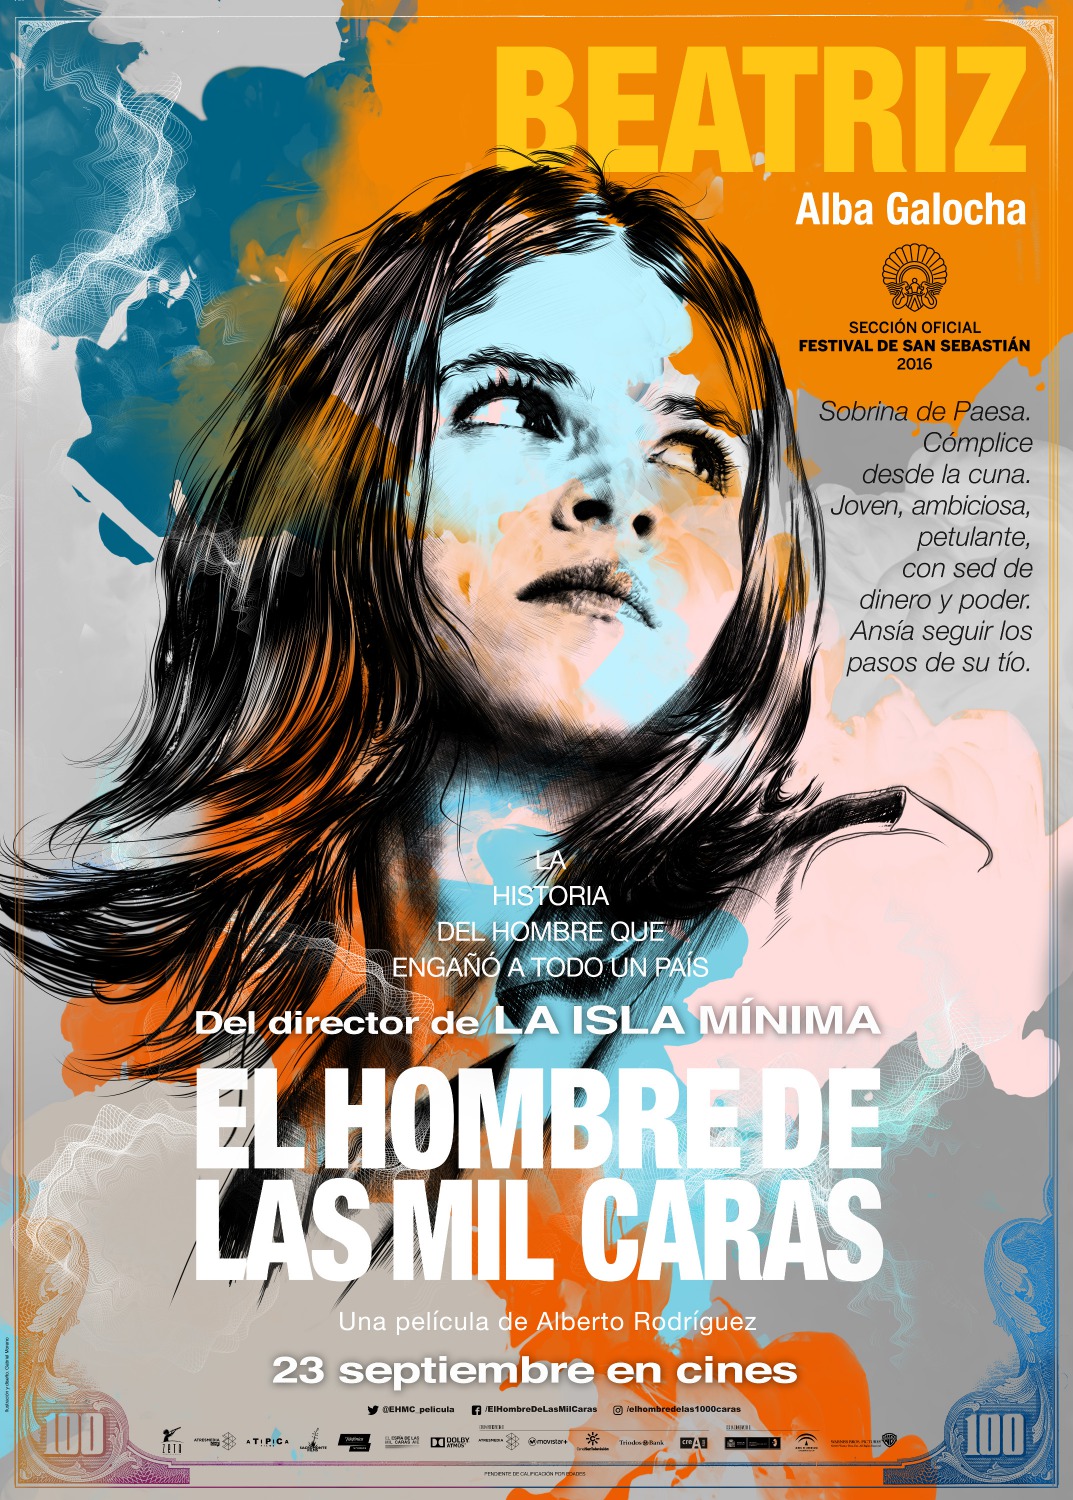 Extra Large Movie Poster Image for El hombre de las mil caras (#6 of 7)